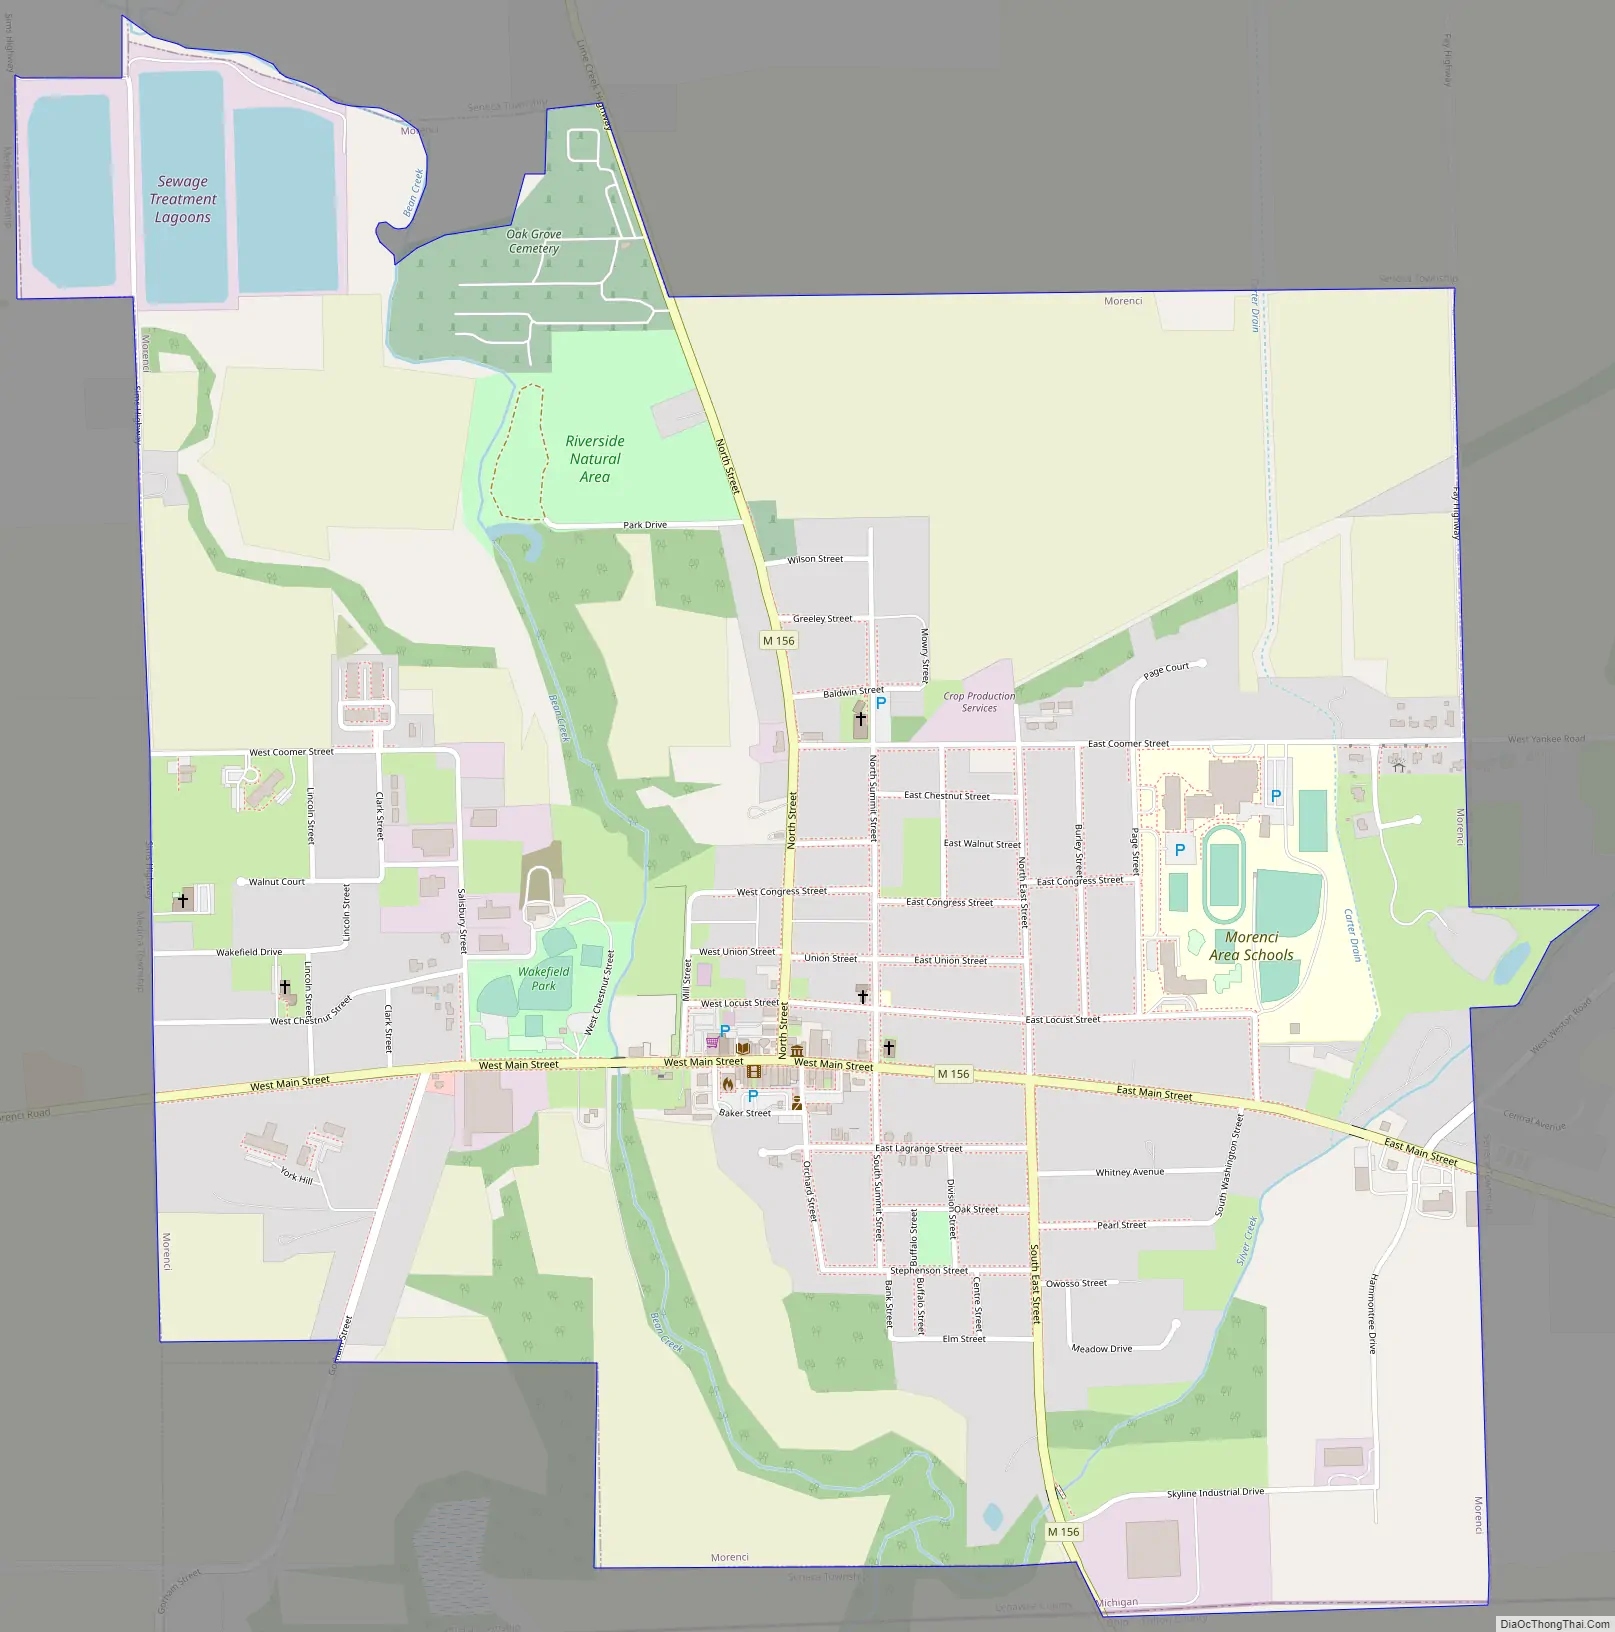 Map of Morenci city, Michigan